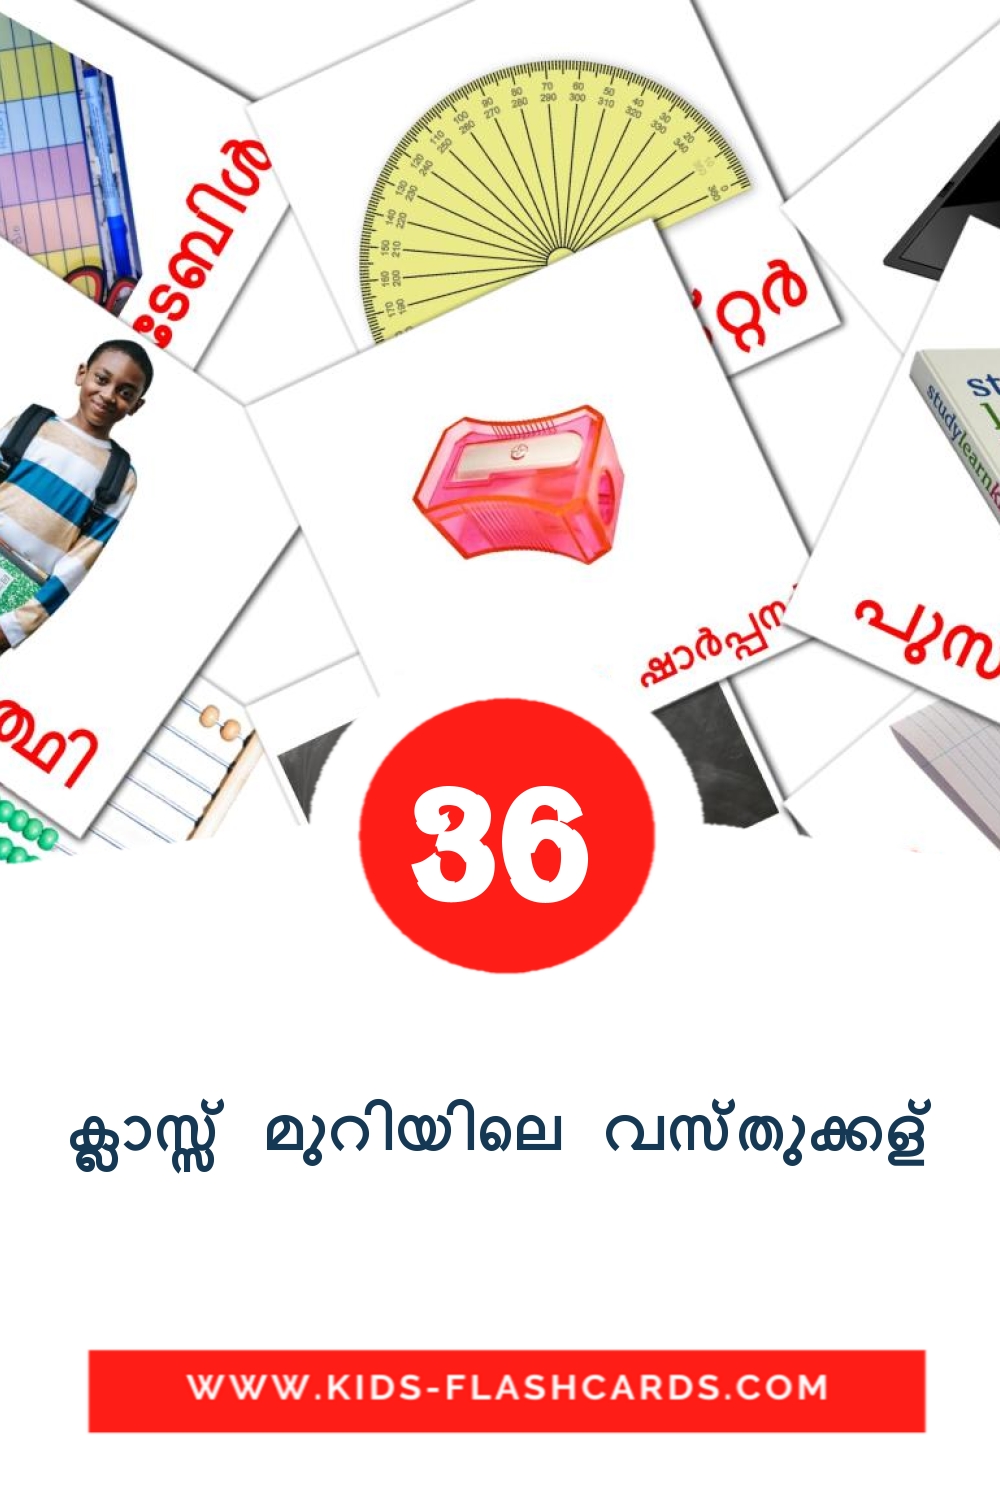 36 tarjetas didacticas de ക്ലാസ്സ് മുറിയിലെ വസ്തുക്കള് para el jardín de infancia en malayalam